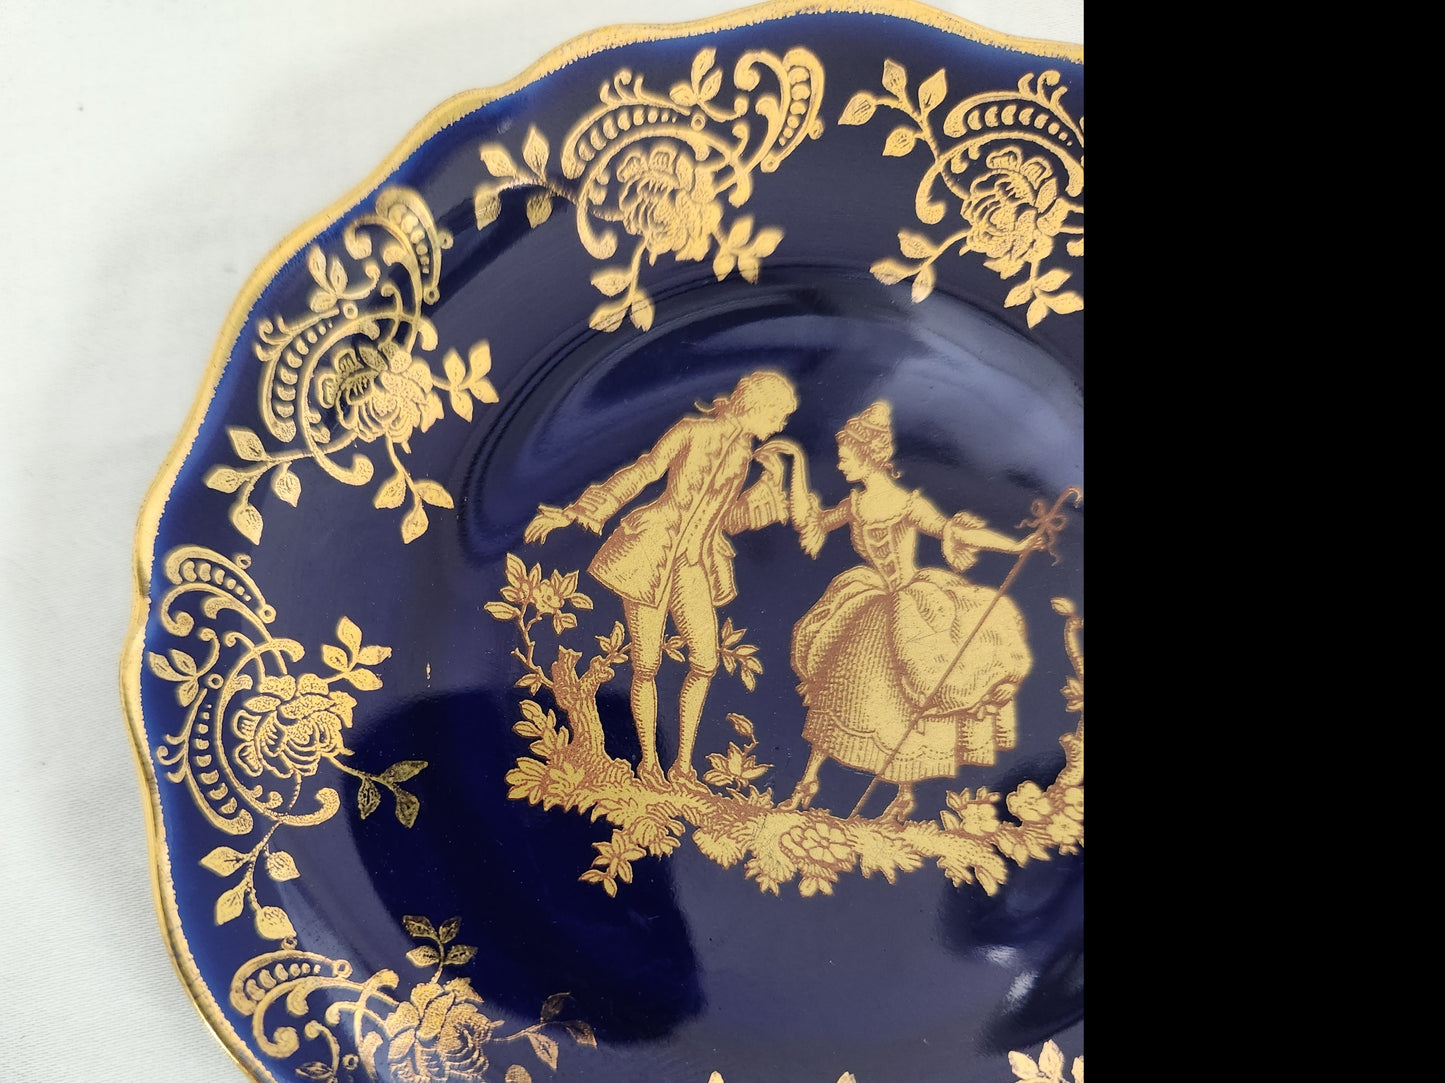 Limoges Veritable D'art 4-1/2" Cobalt Blue & Gold Dish